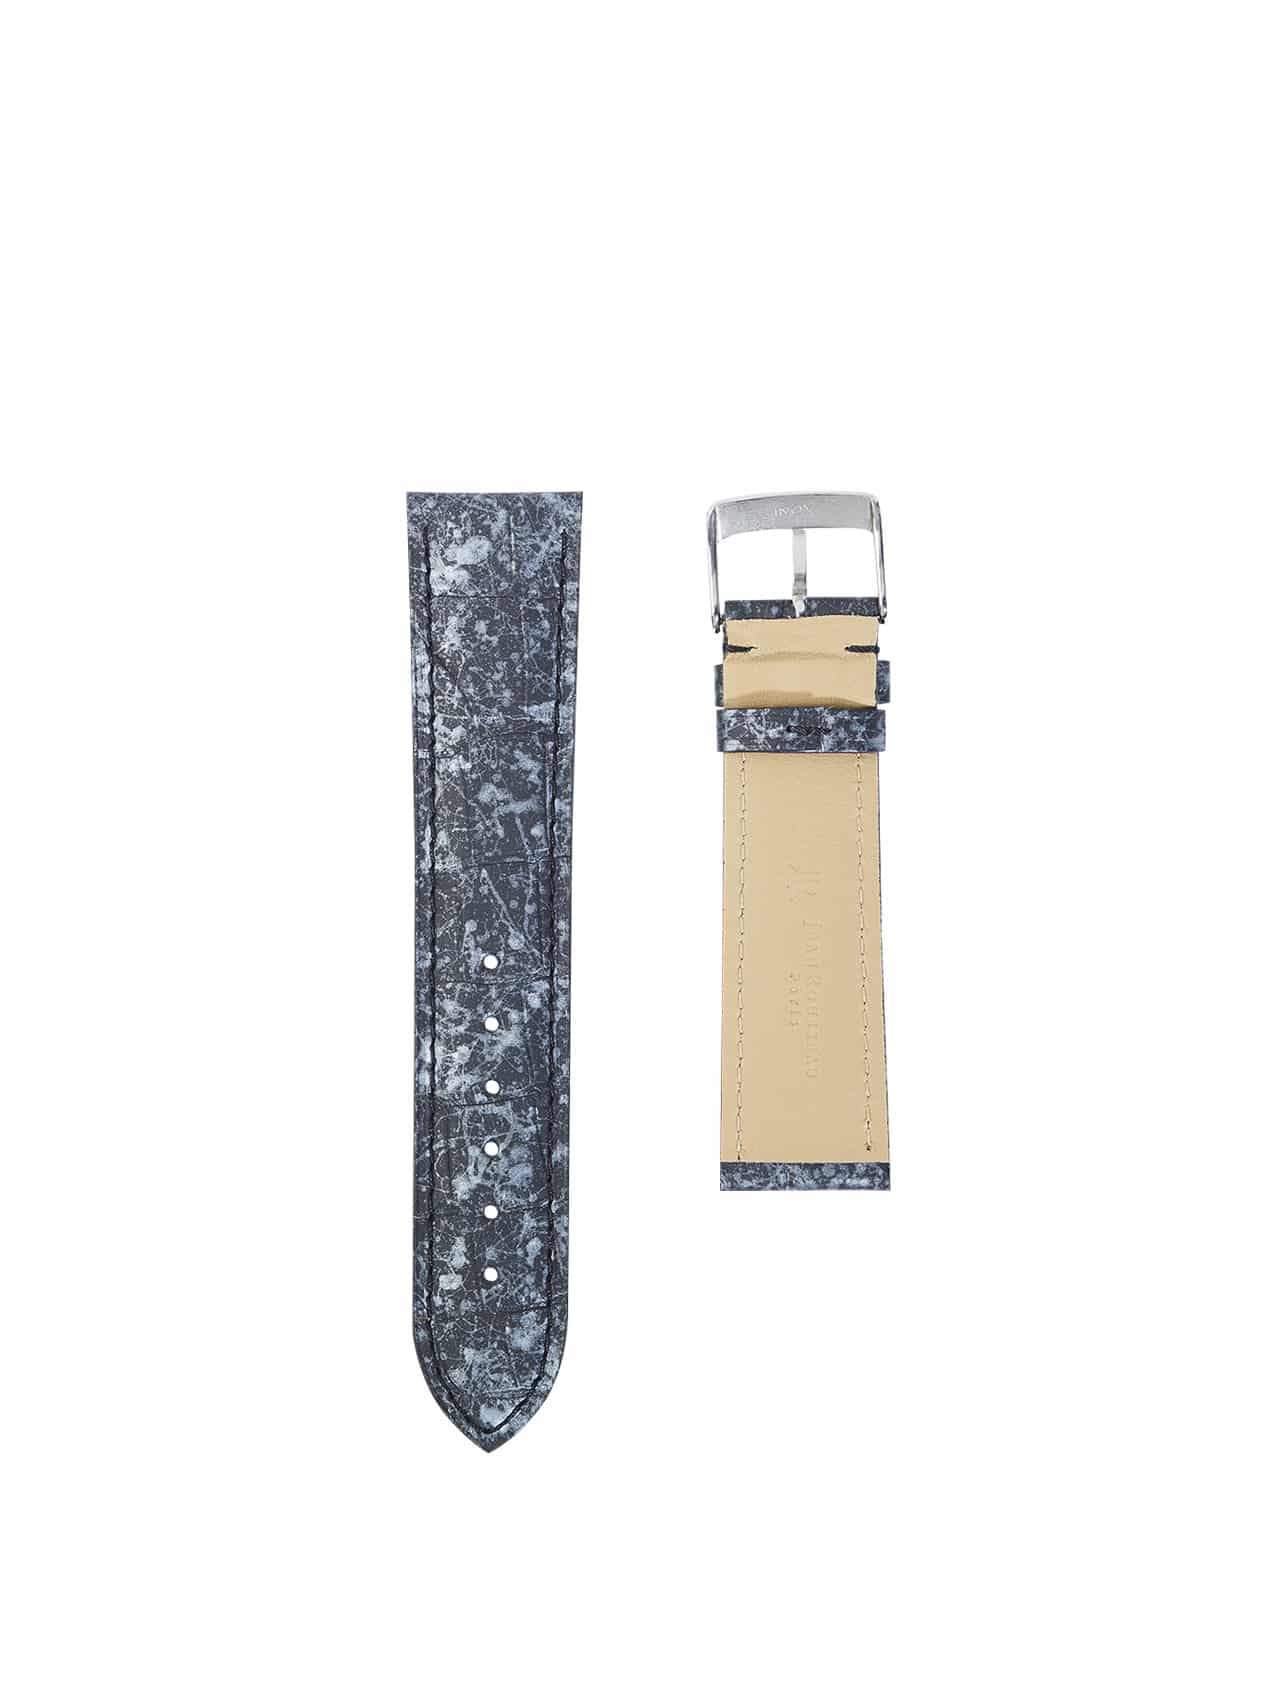 Watch strap 3.5 Asteria rubber touch crocodile silver back